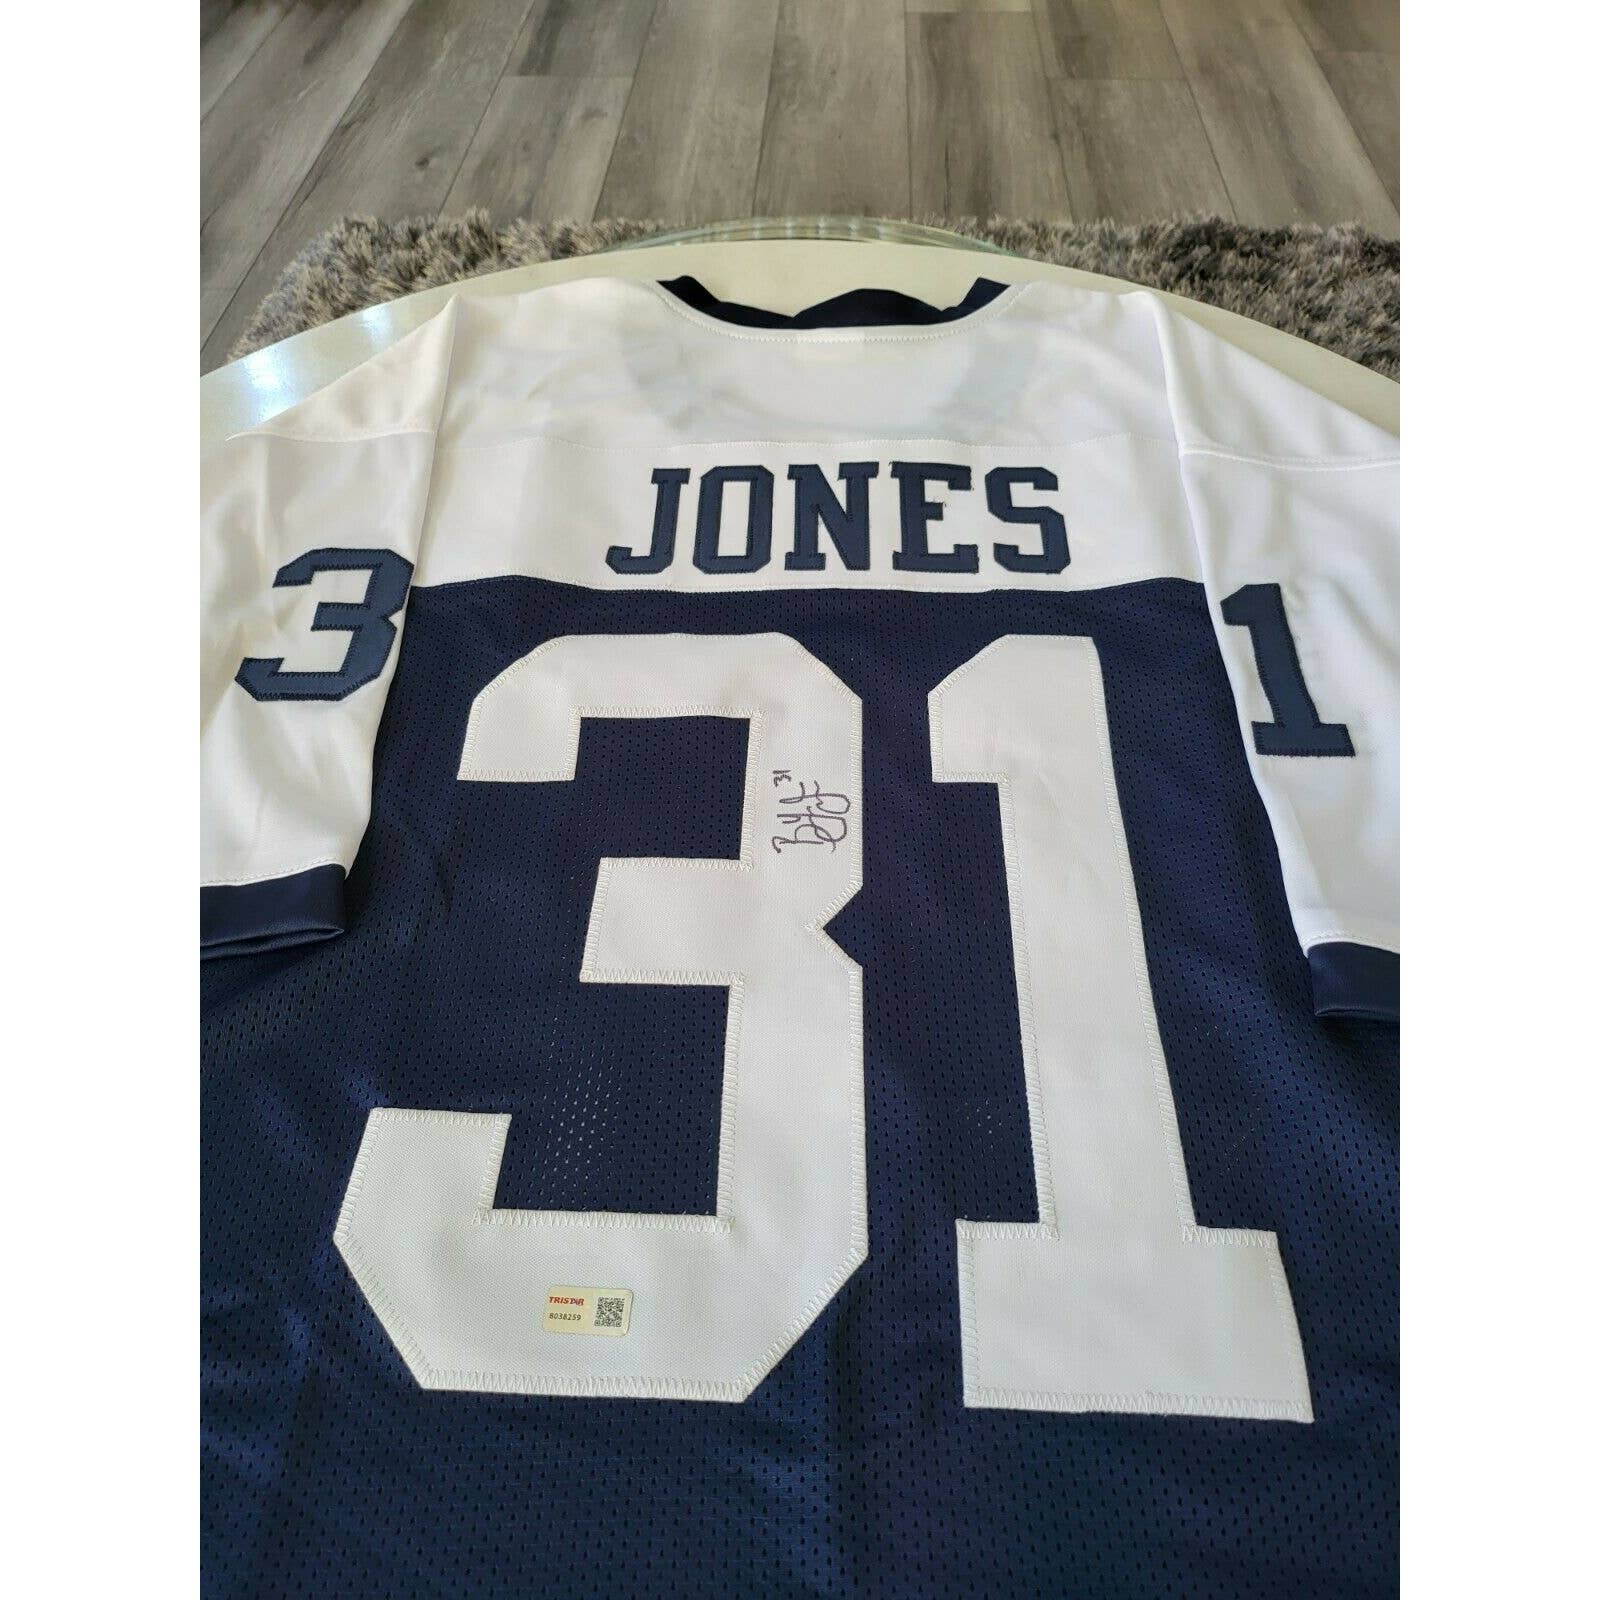 Byron Jones Autographed/Signed Jersey TRISTAR Dallas Cowboys - TreasuresEvolved